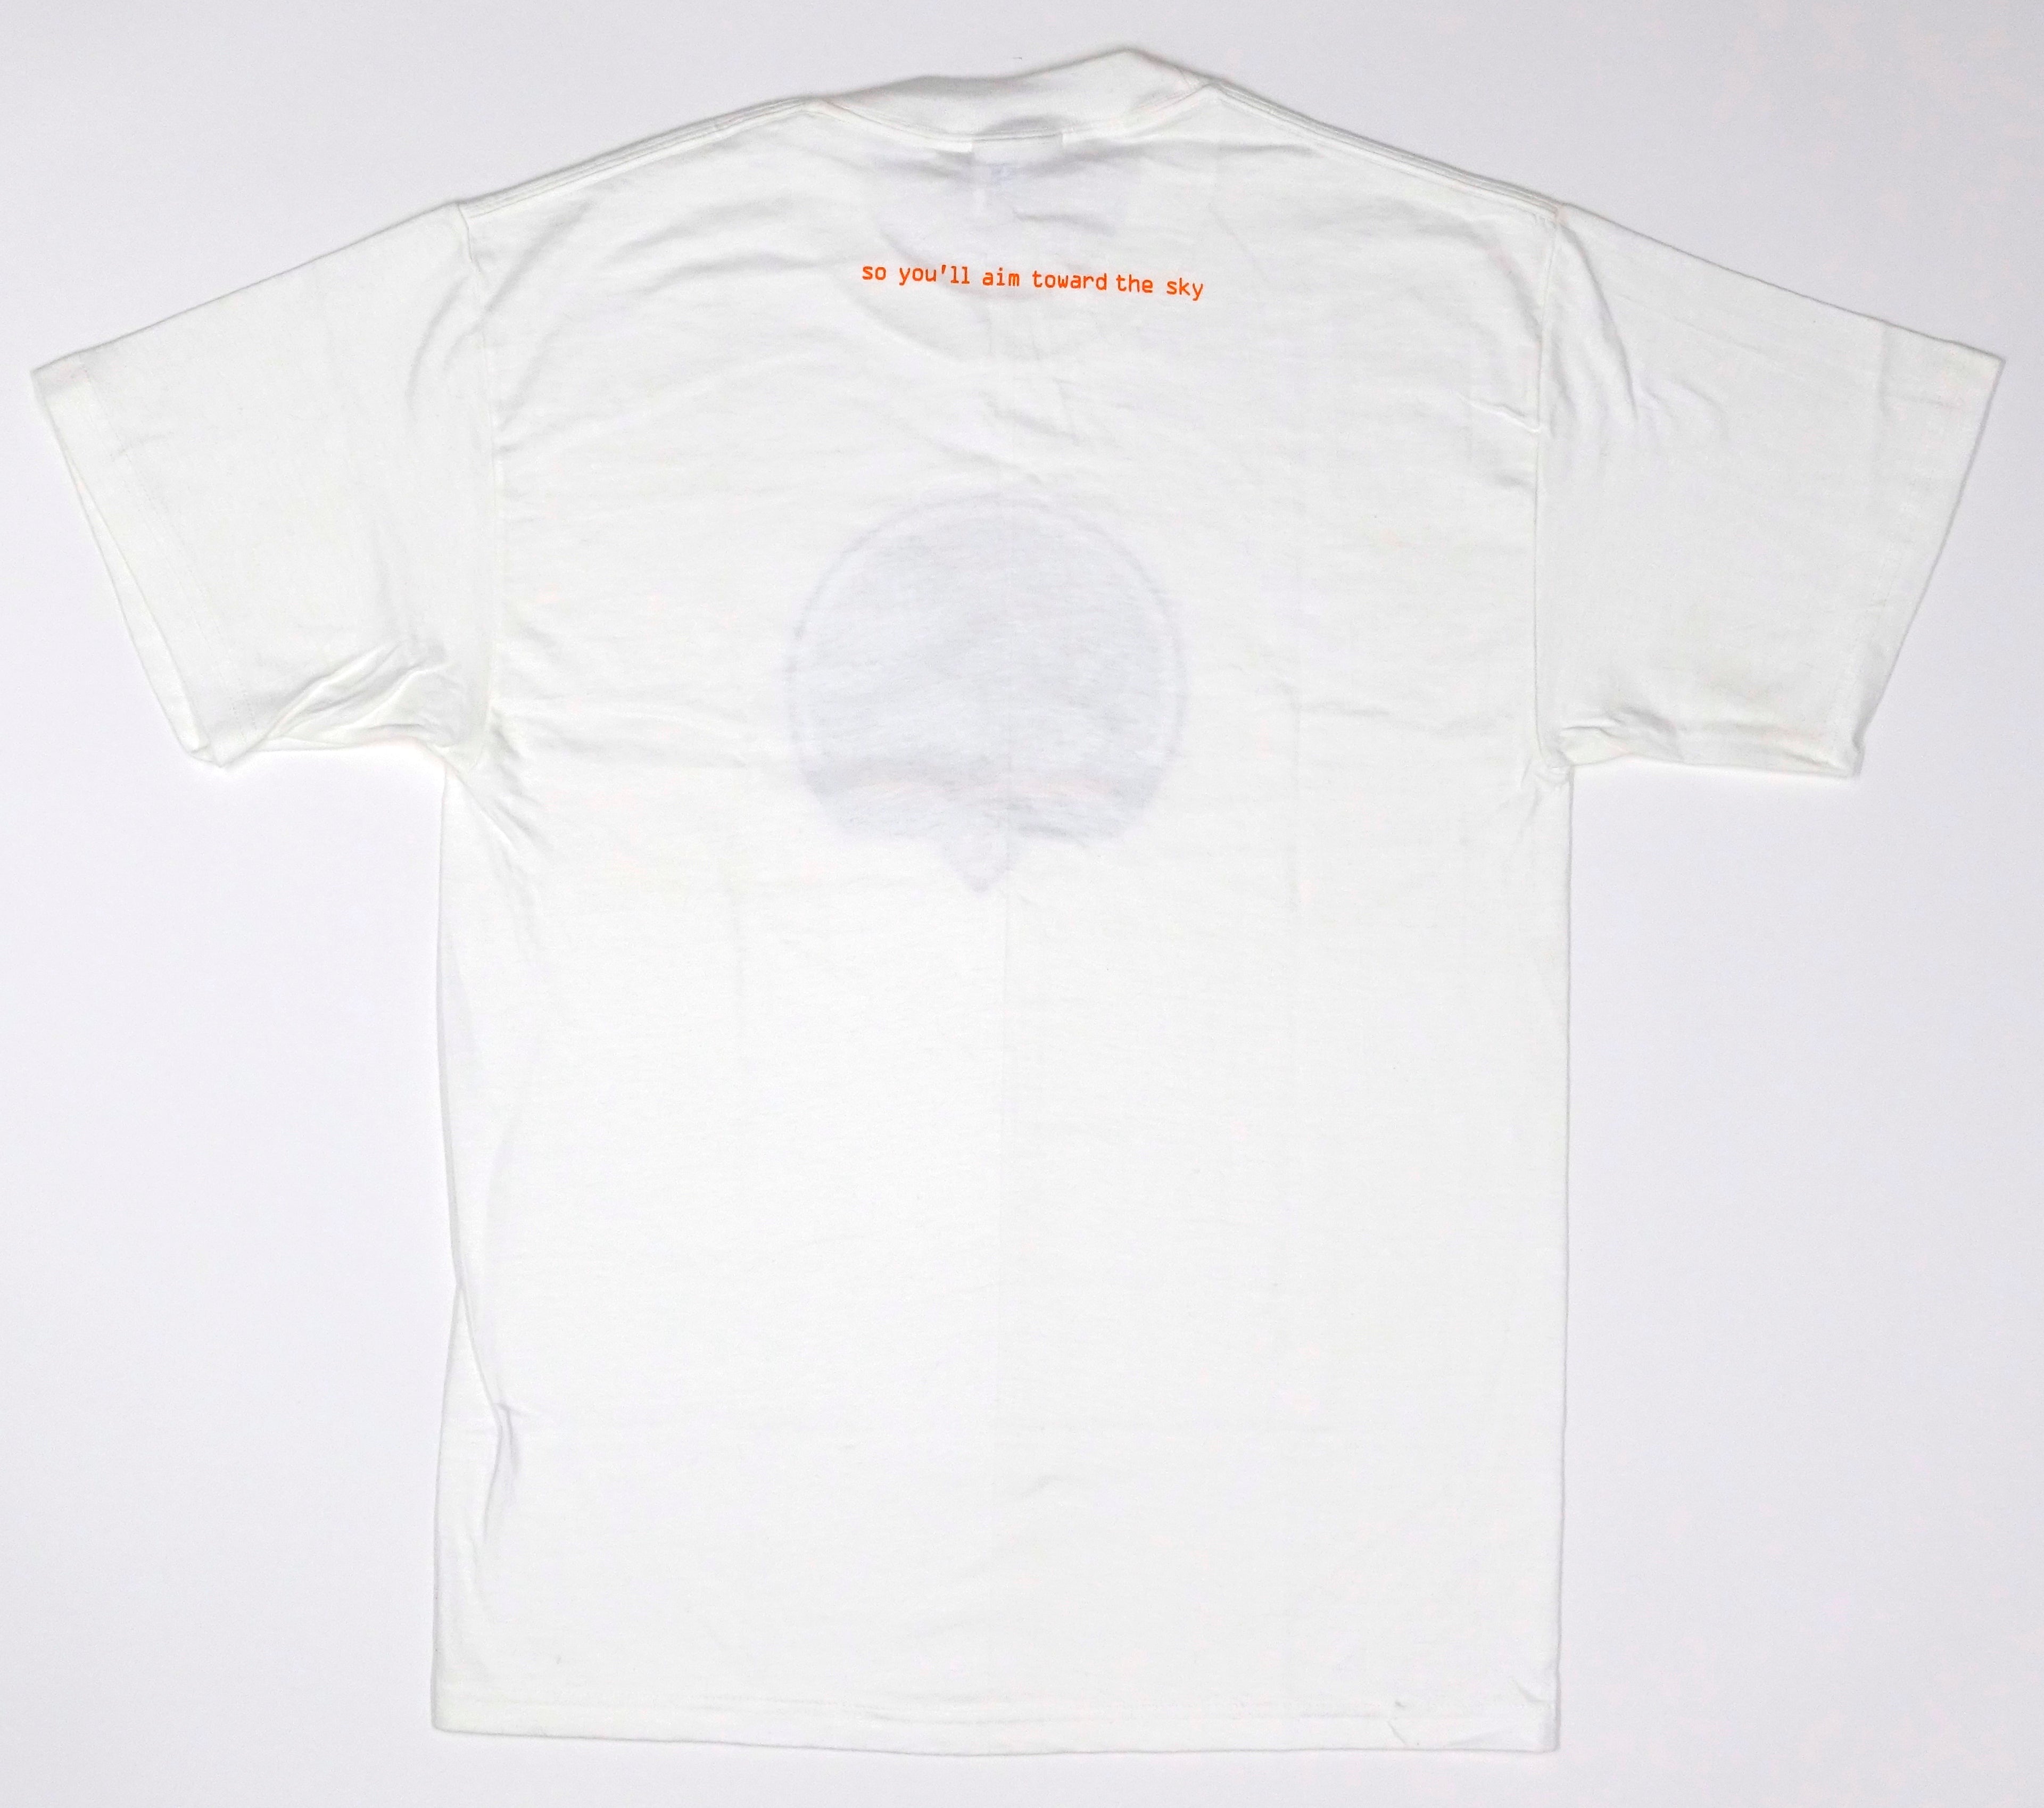 Grandaddy ‎– So You'll Aim Towards The Sky 2000 Tour Shirt Size Medium